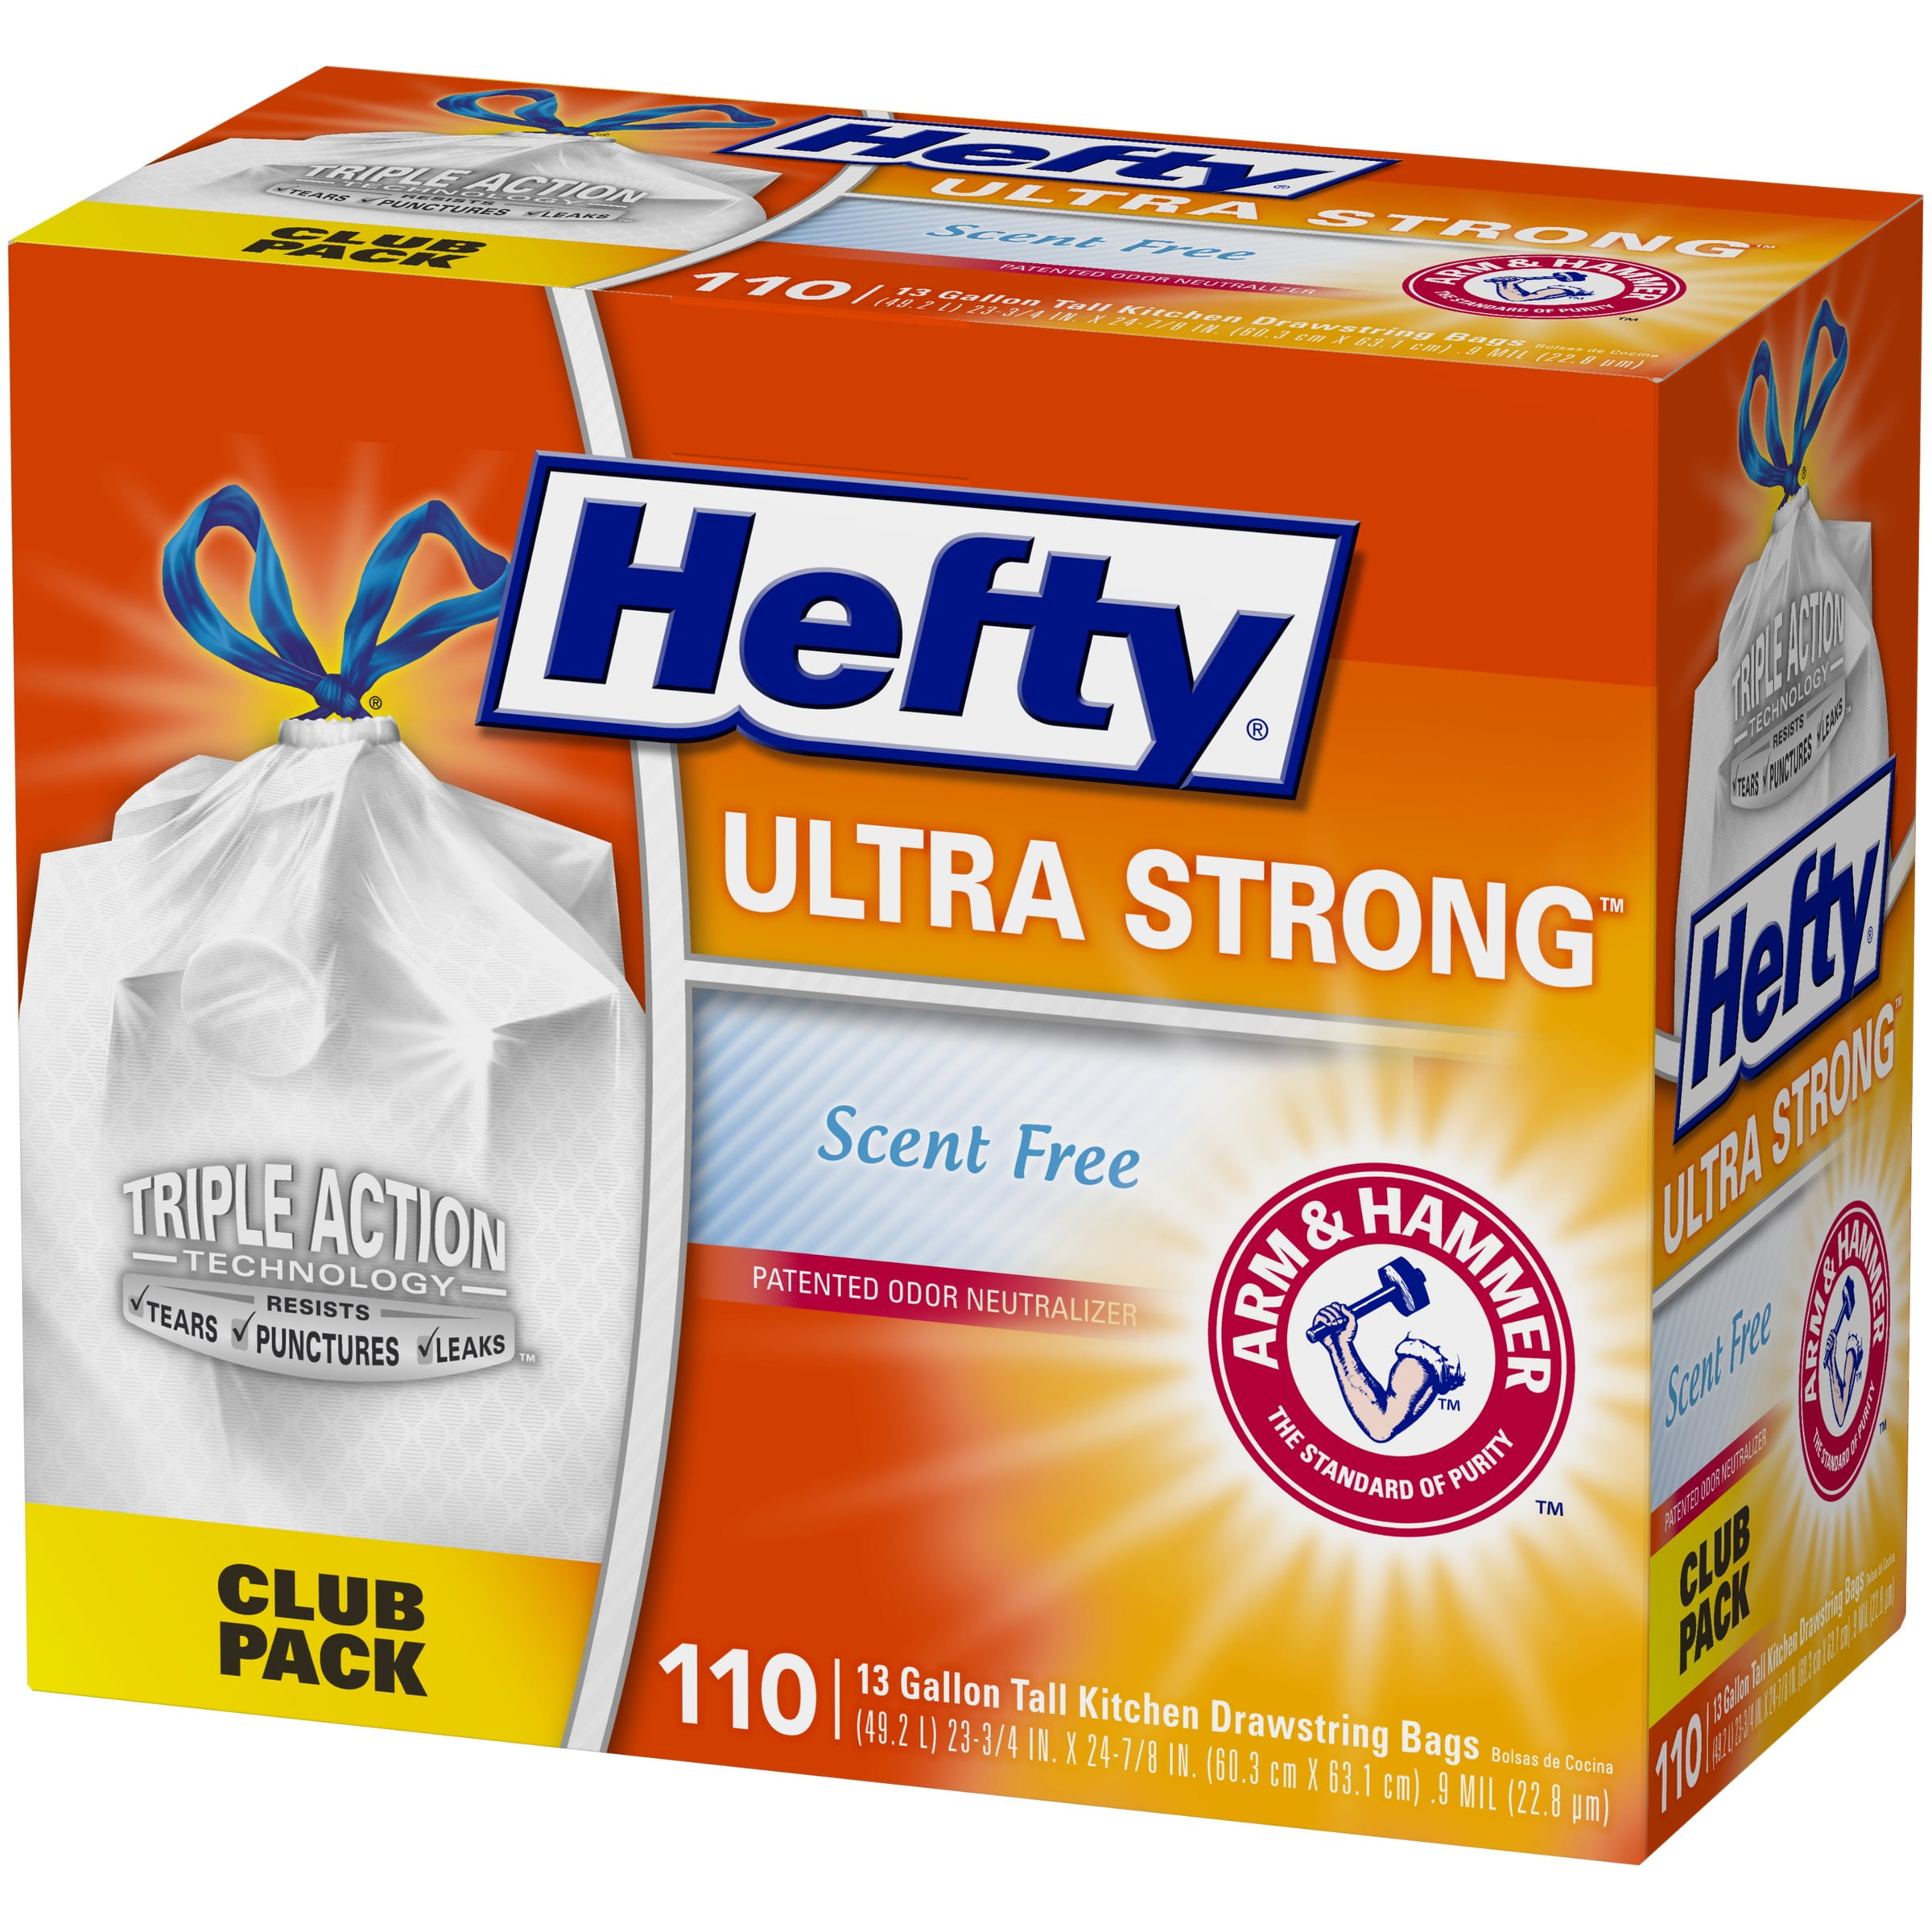 Hefty® Unscented Odor Block® Tall Kitchen Drawstring Trash Bags 10 ct. Box., Trash Bags